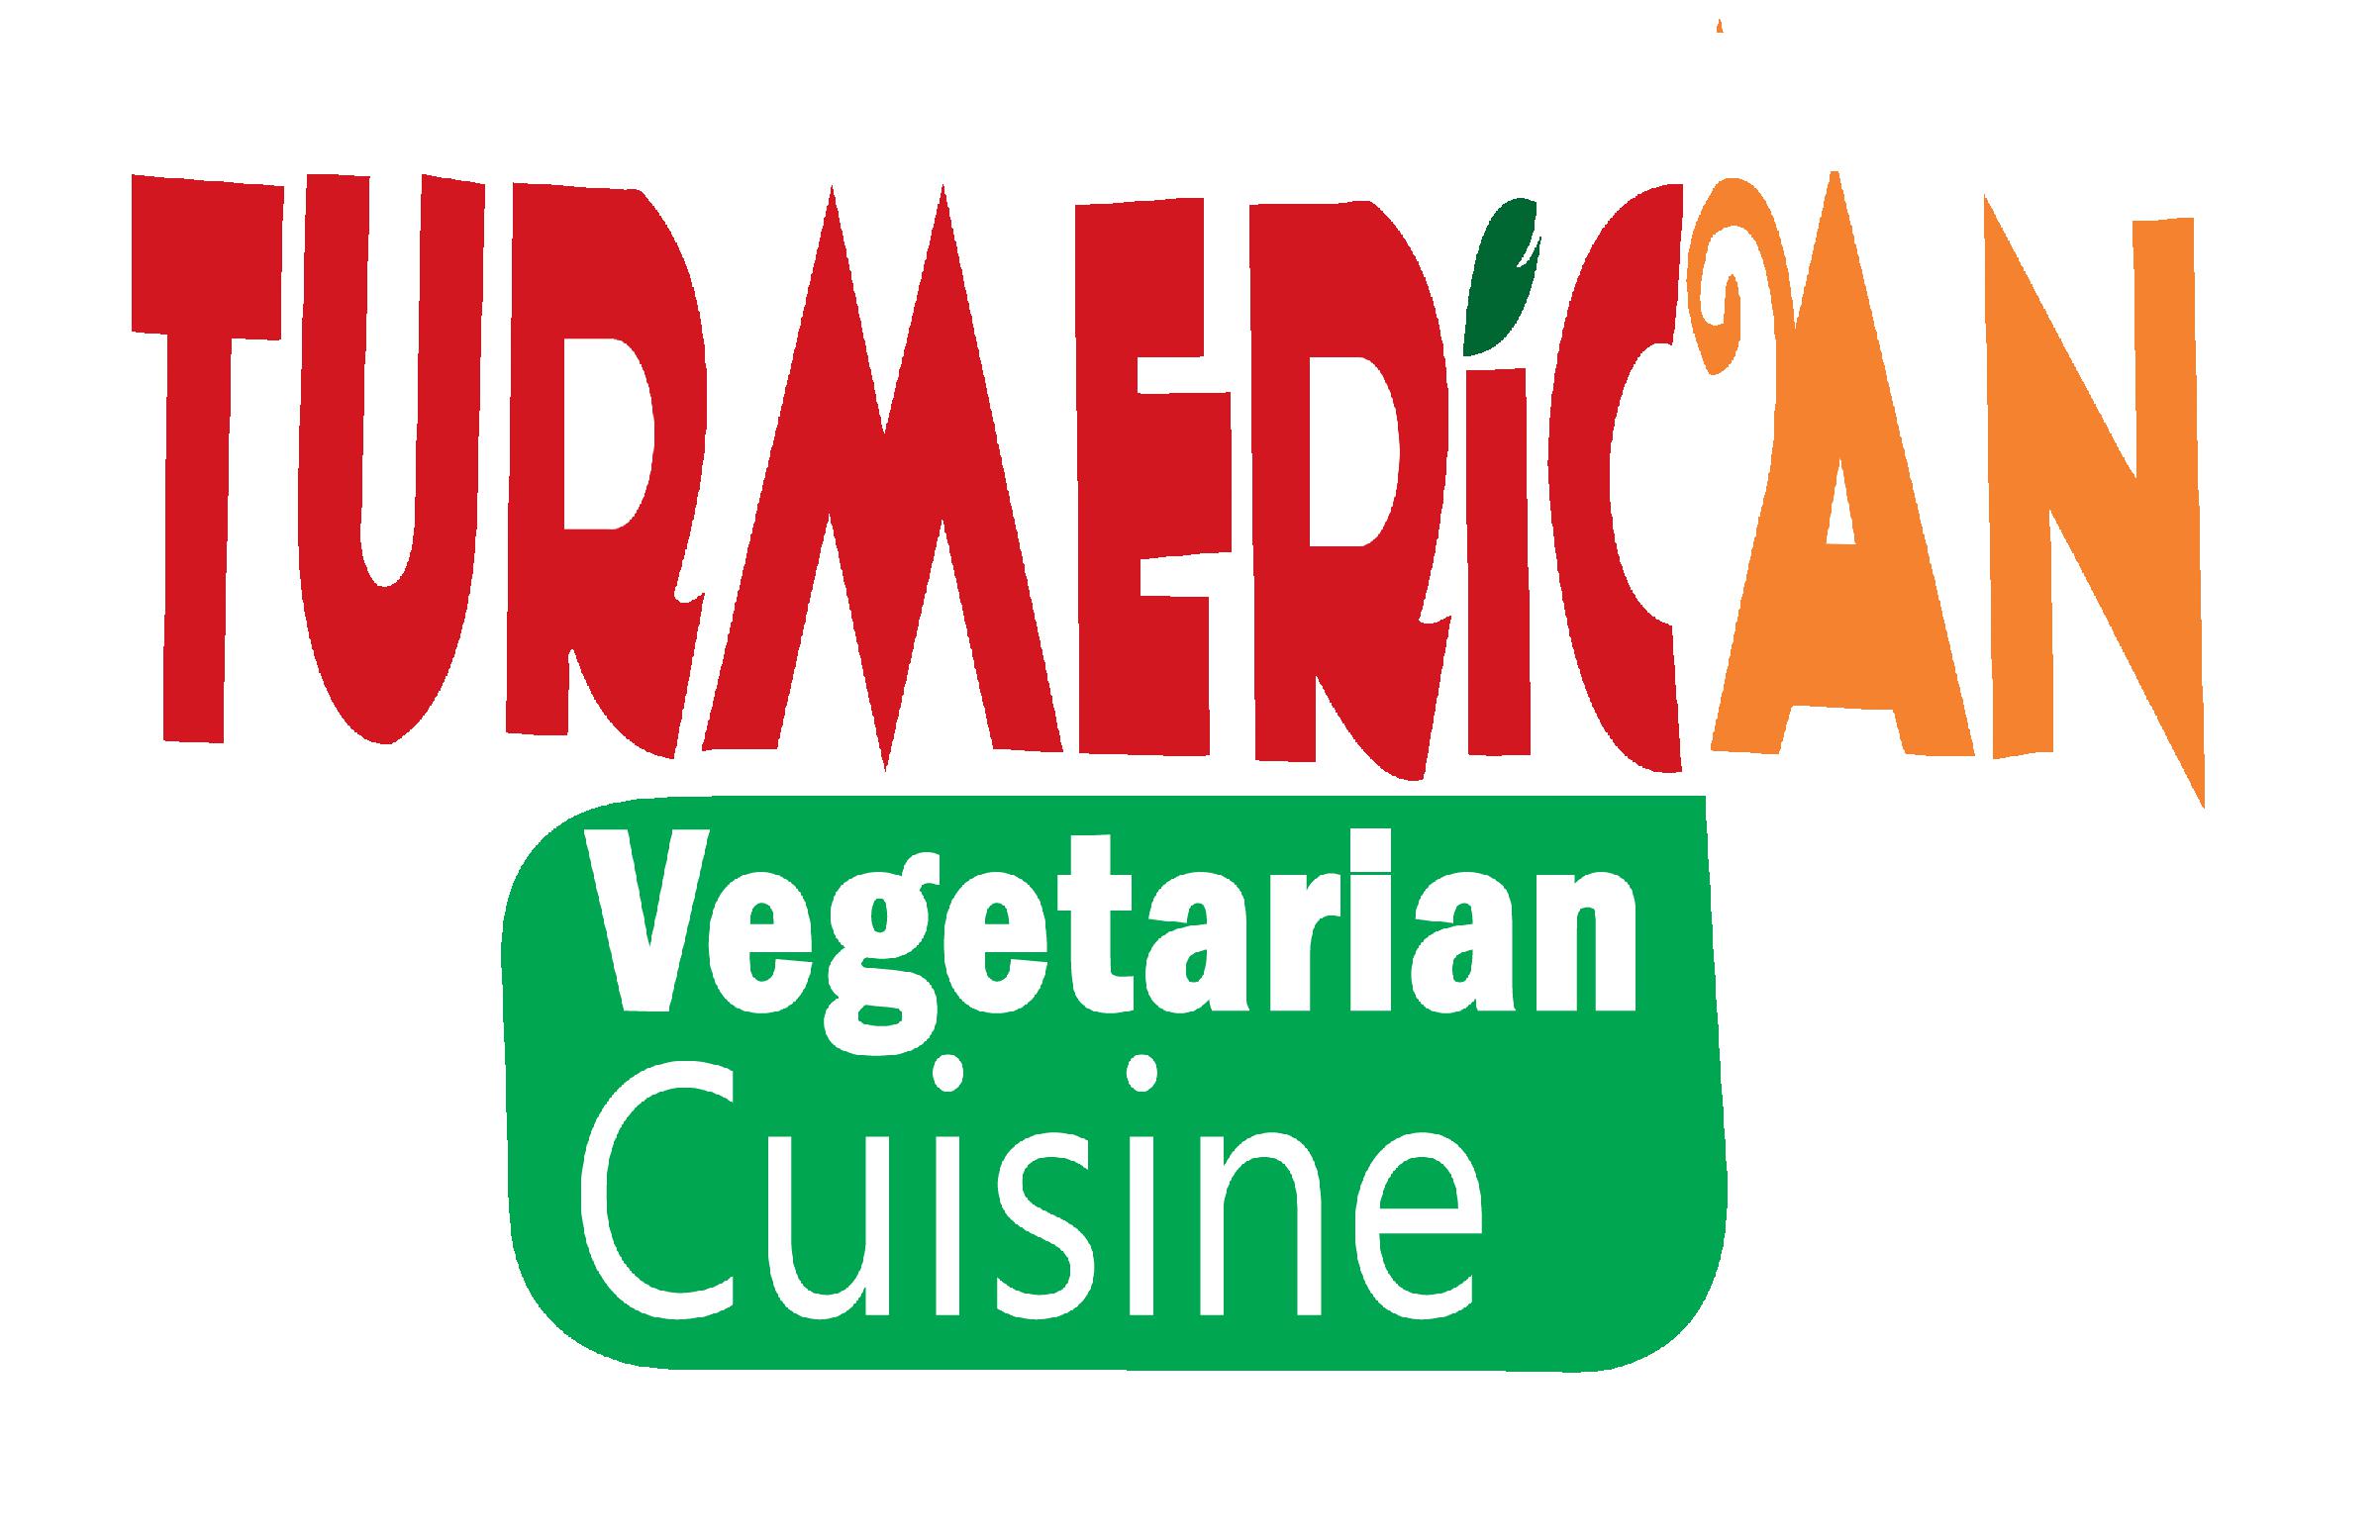 Turmerican Vegetarian Cuisine Novi